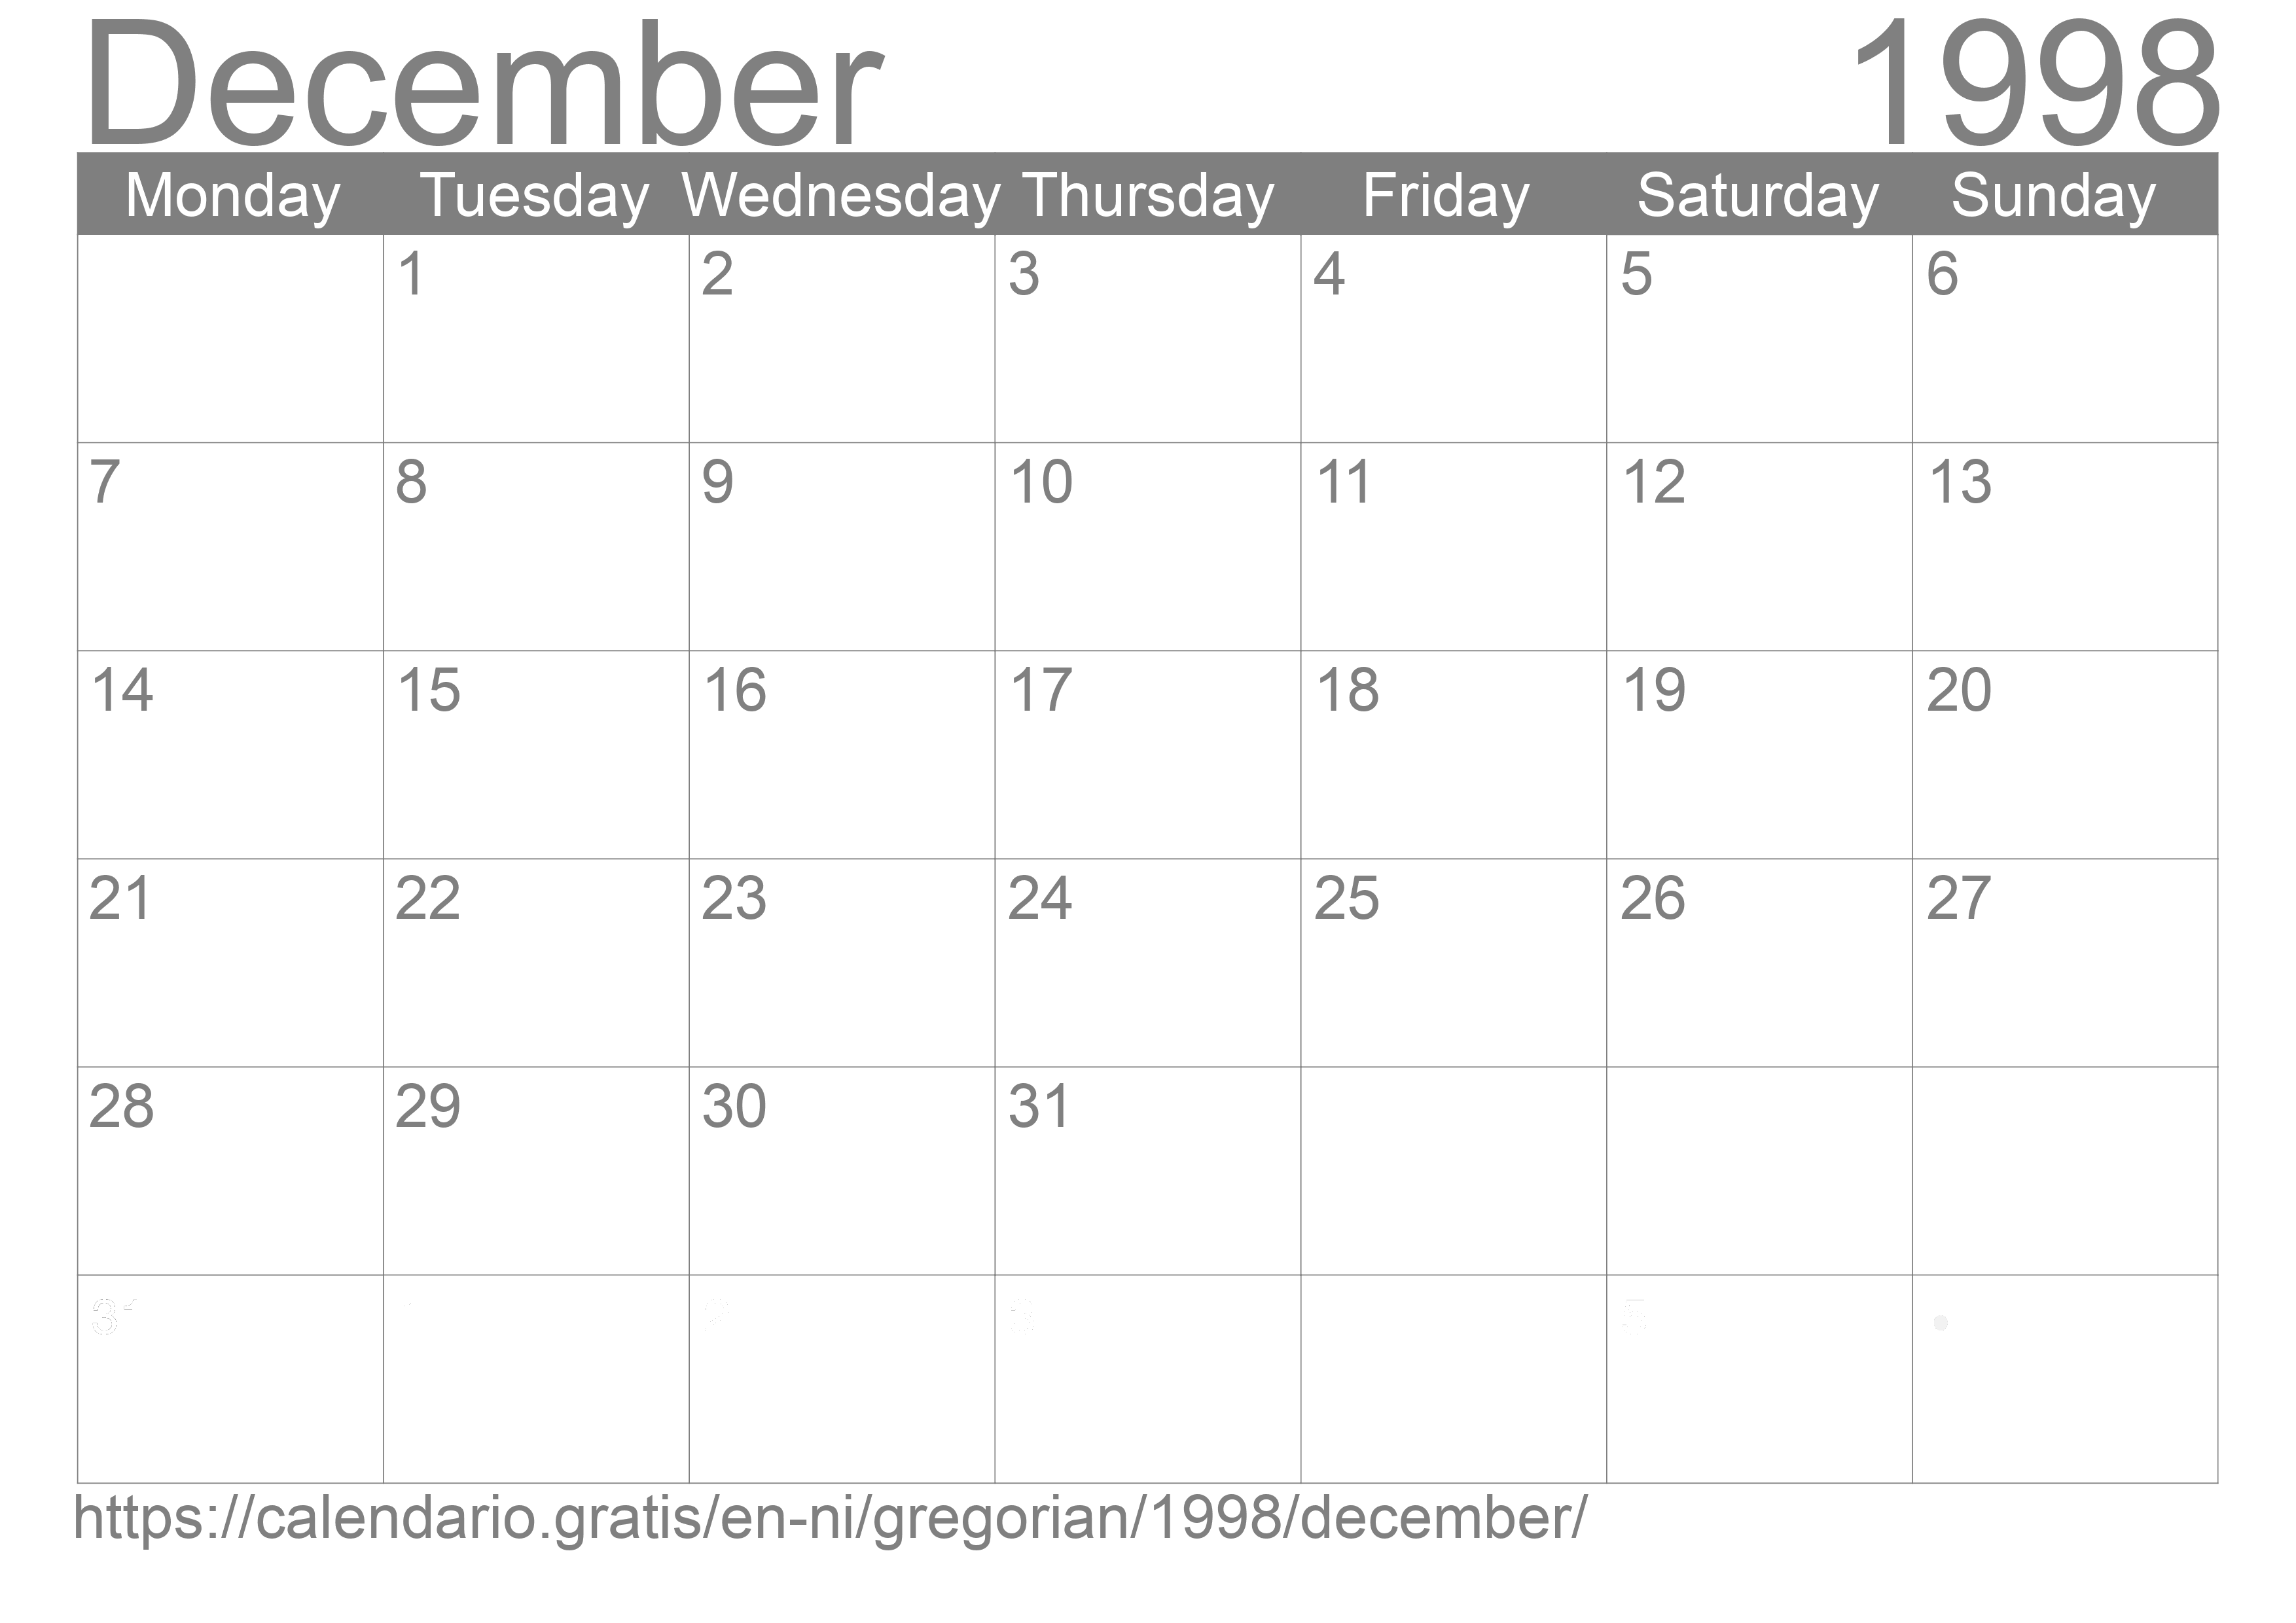 Calendar December 1998 to print